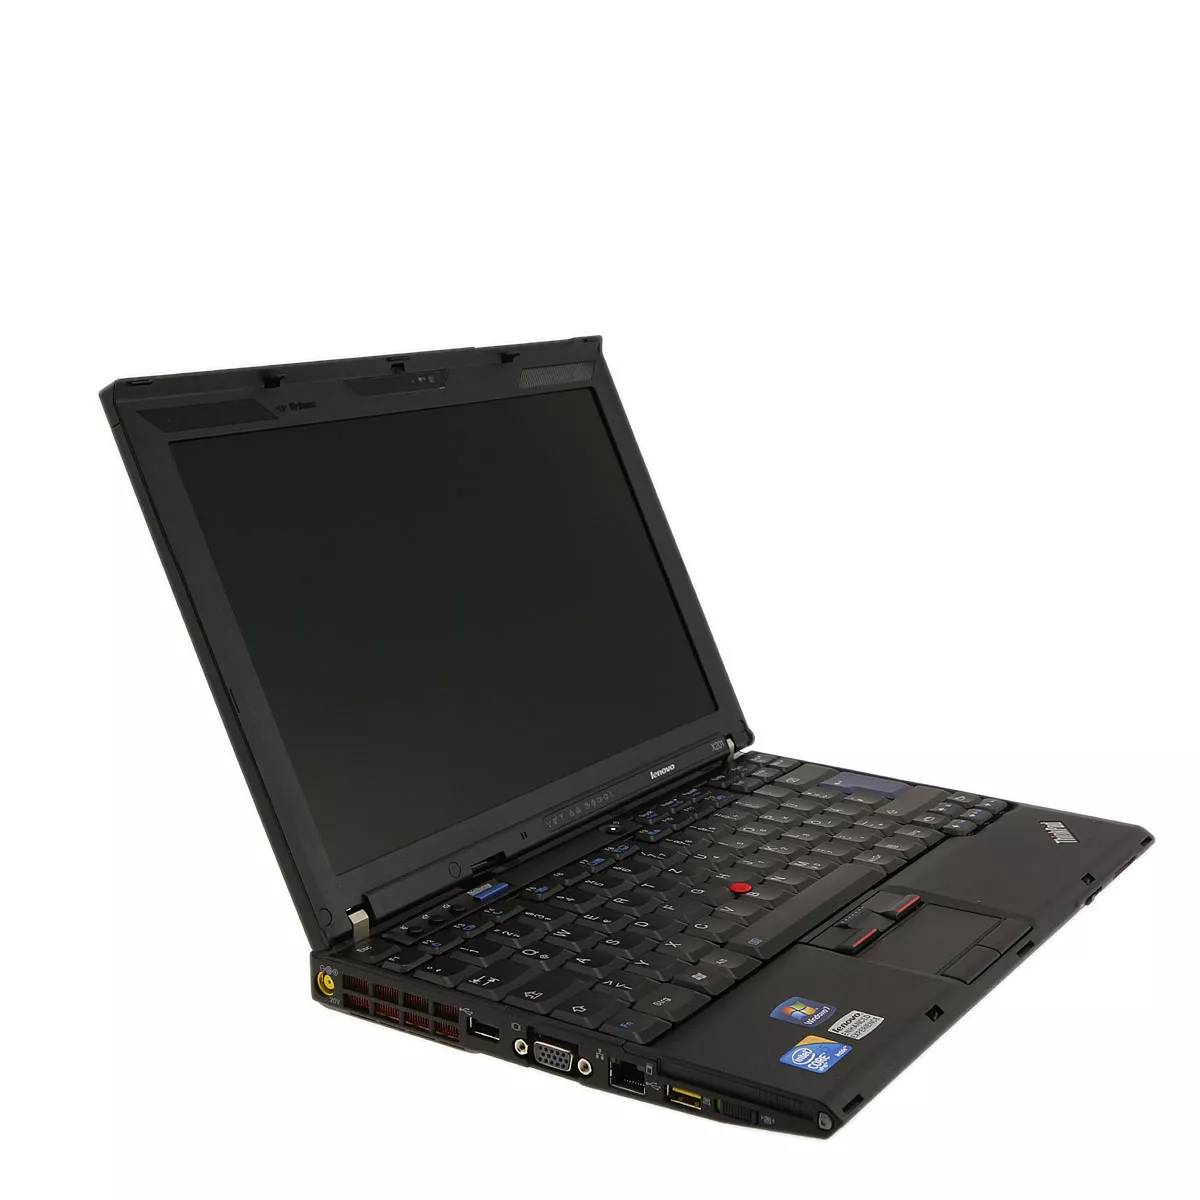 Lenovo ThinkPad X201 Core i5 560M 2,6 GHz Webcam